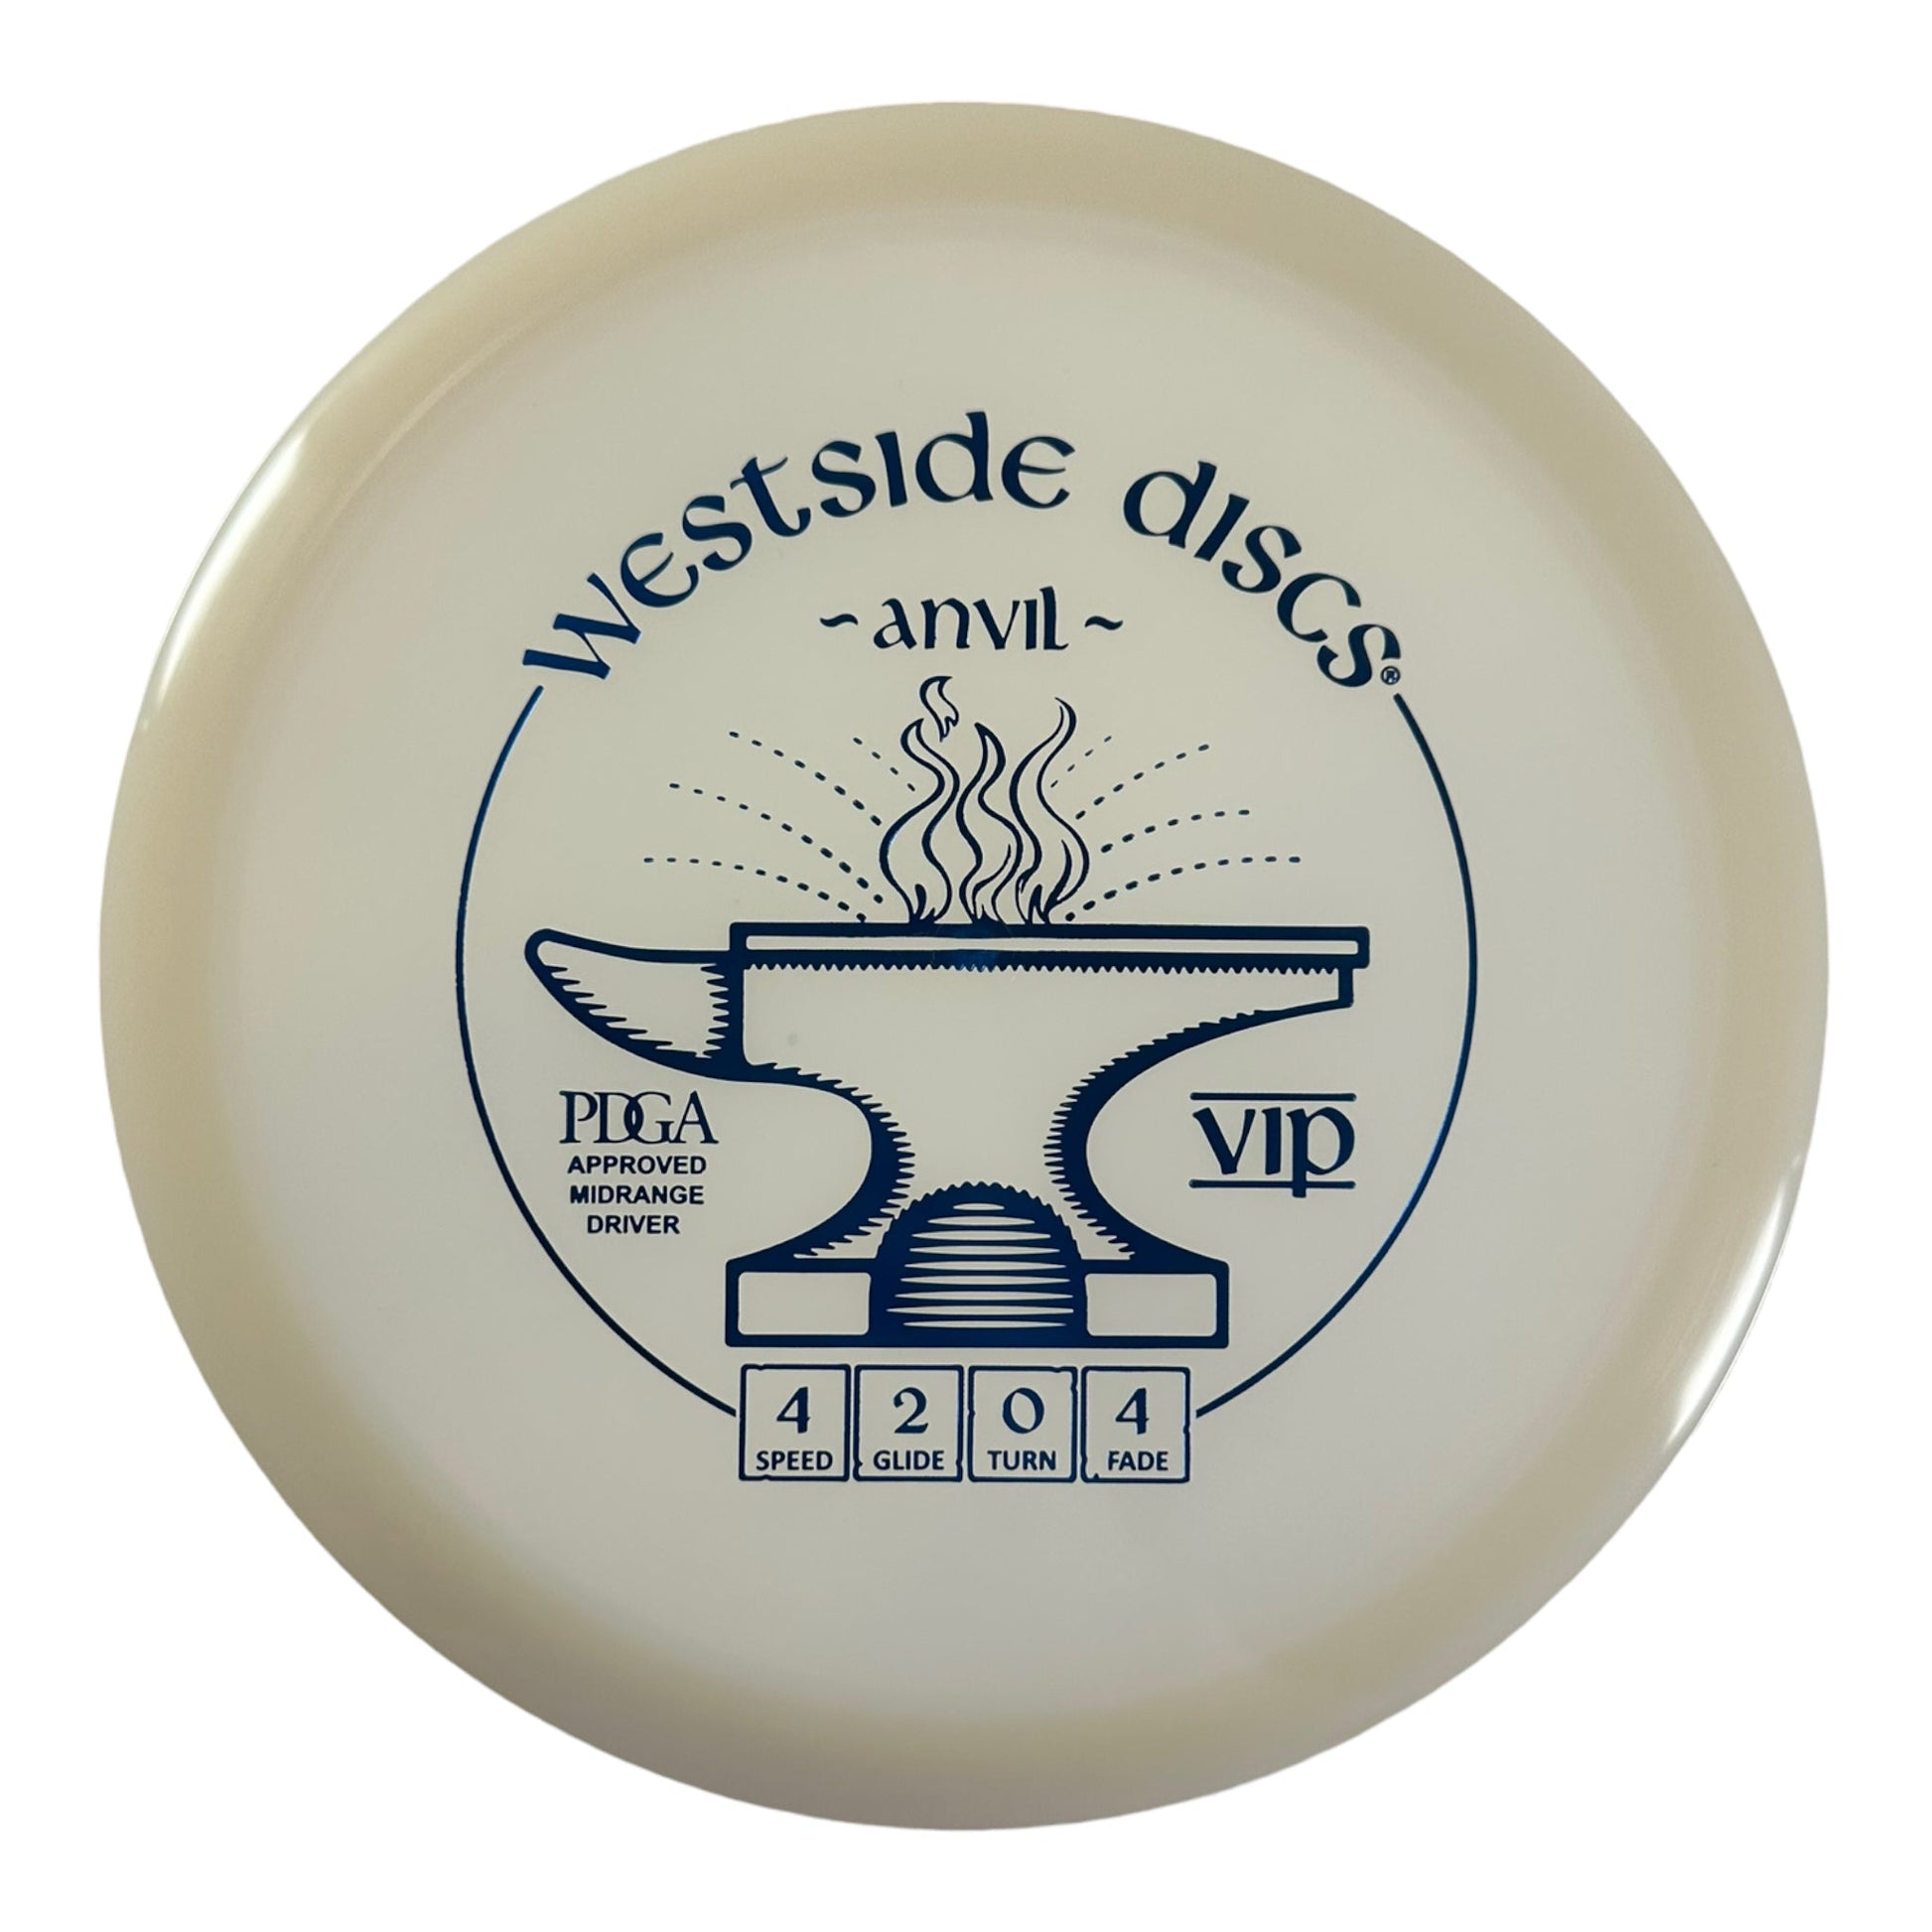 Westside Discs Anvil | VIP | White/Blue 174g Disc Golf